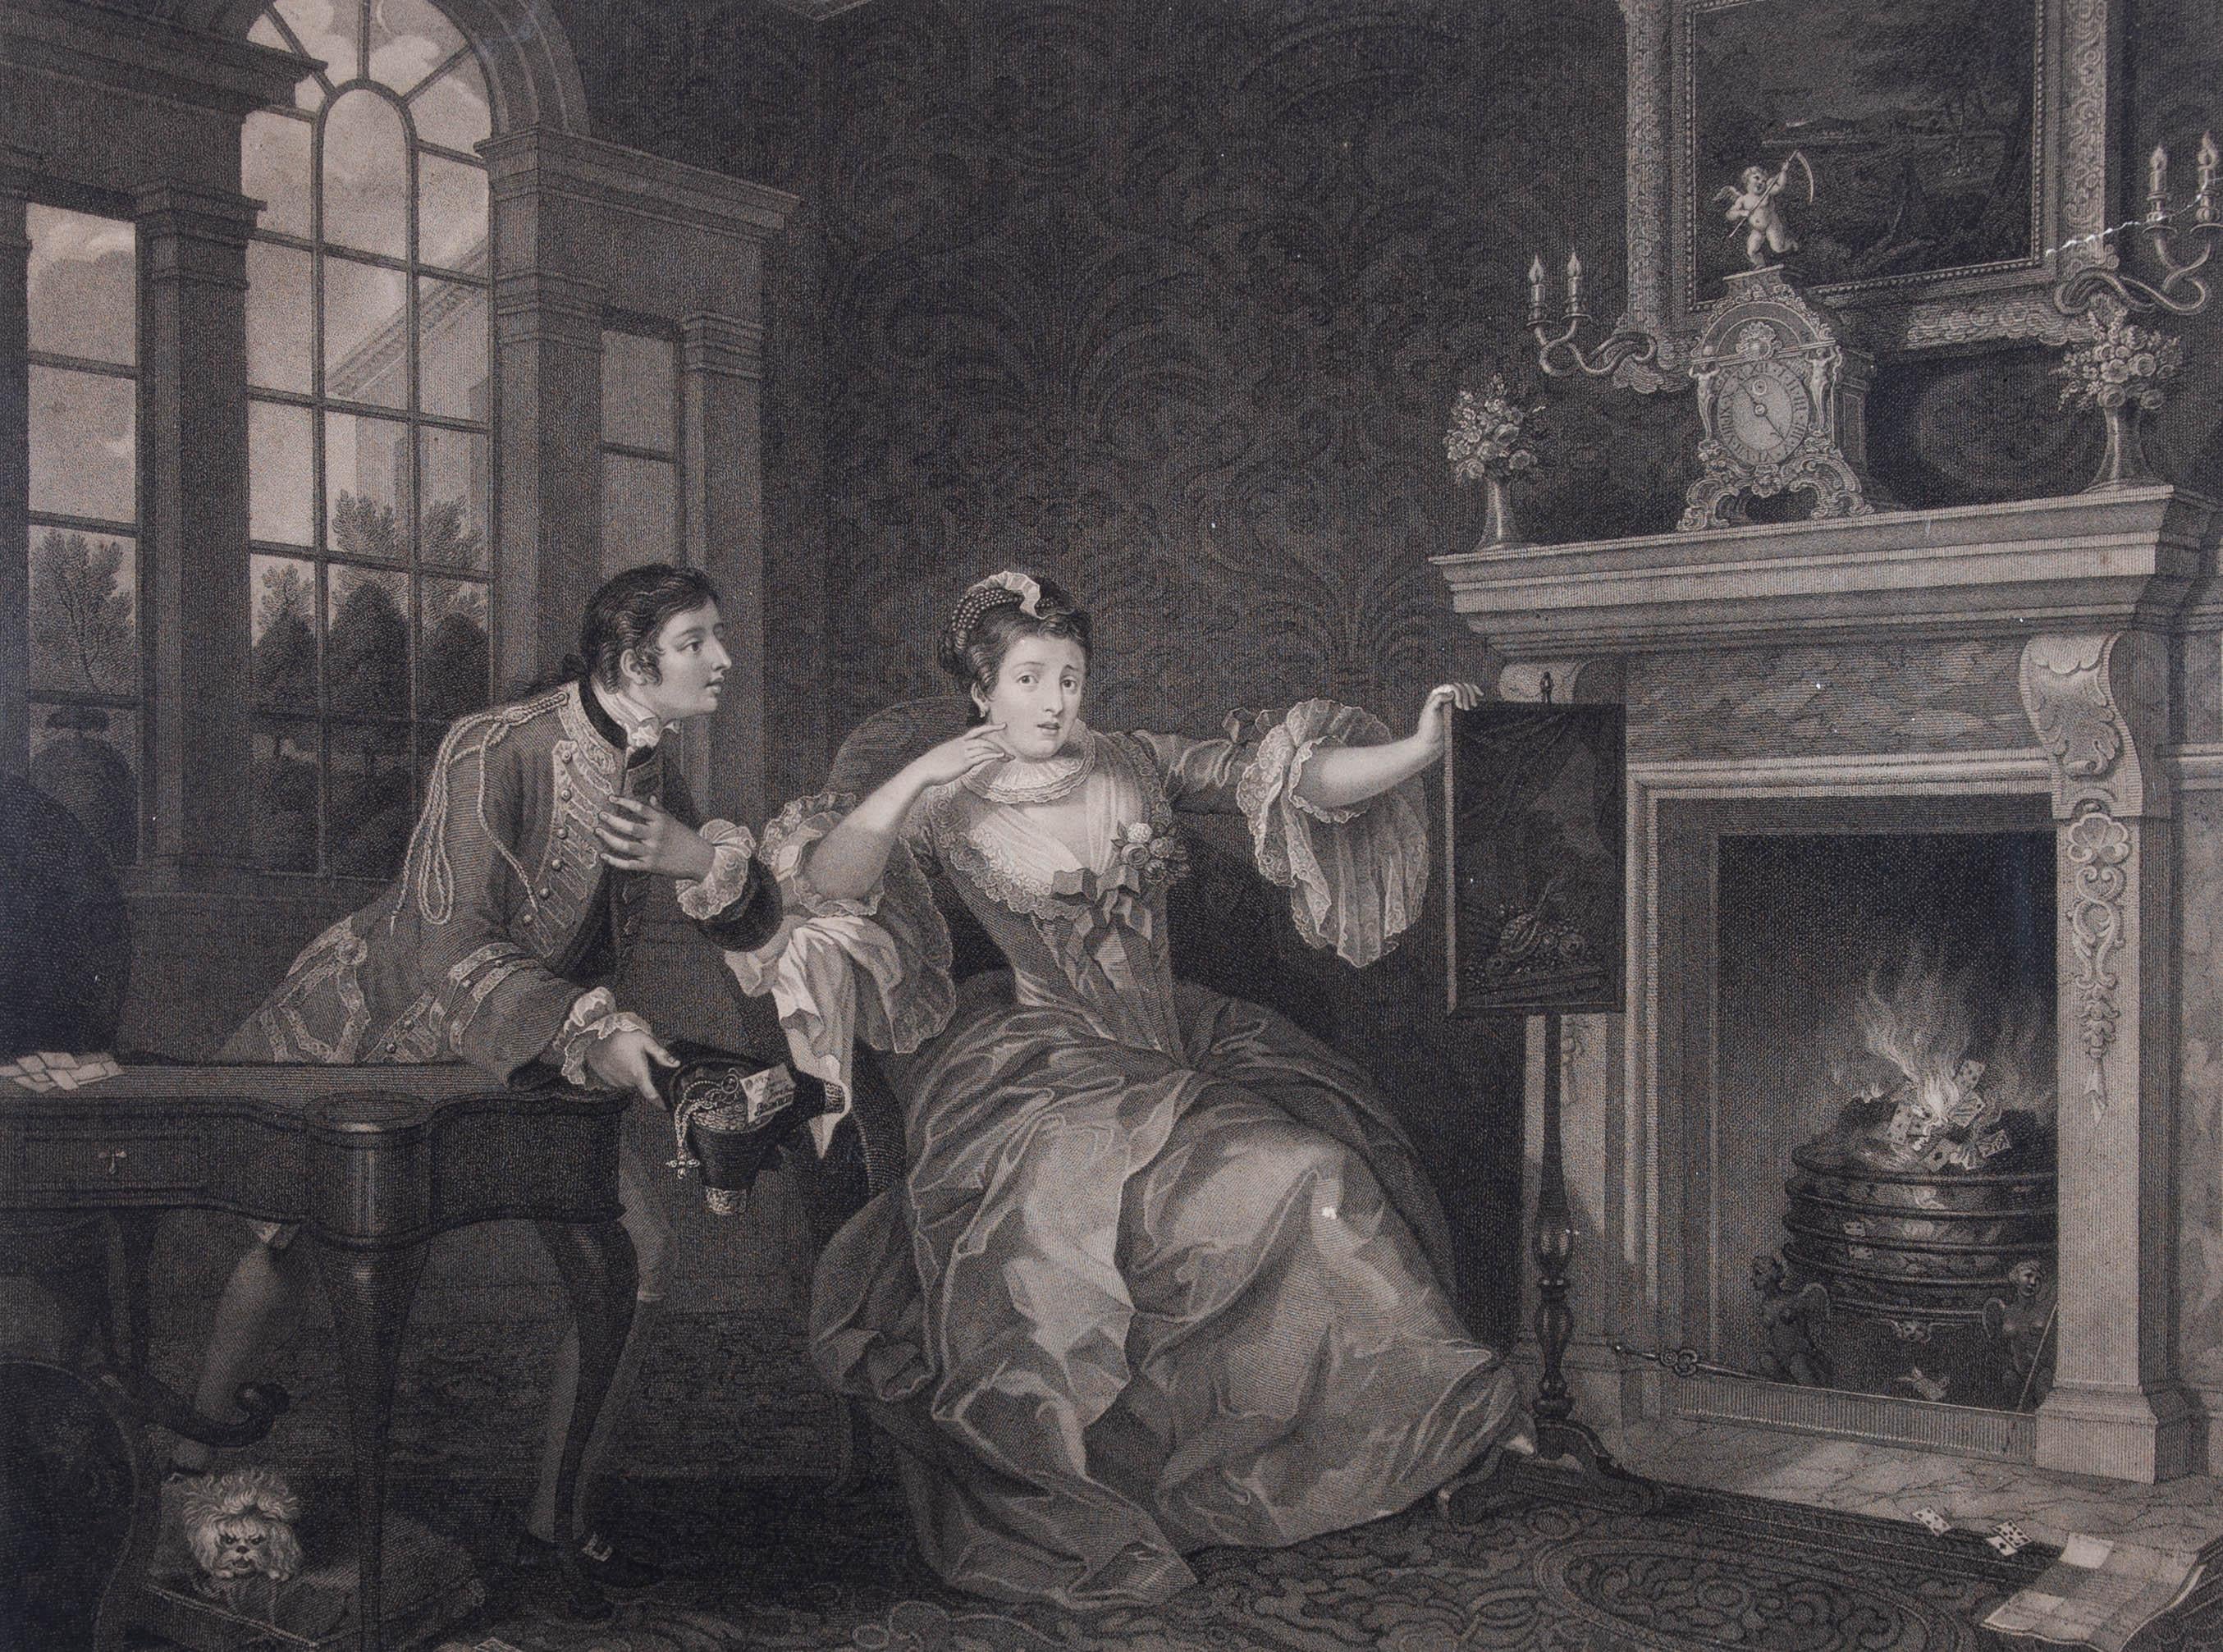 T. Cheesman (1760-1834) after Hogarth - 1820 Engraving, The Lady's Last Stake - Print by Thomas Cheesman